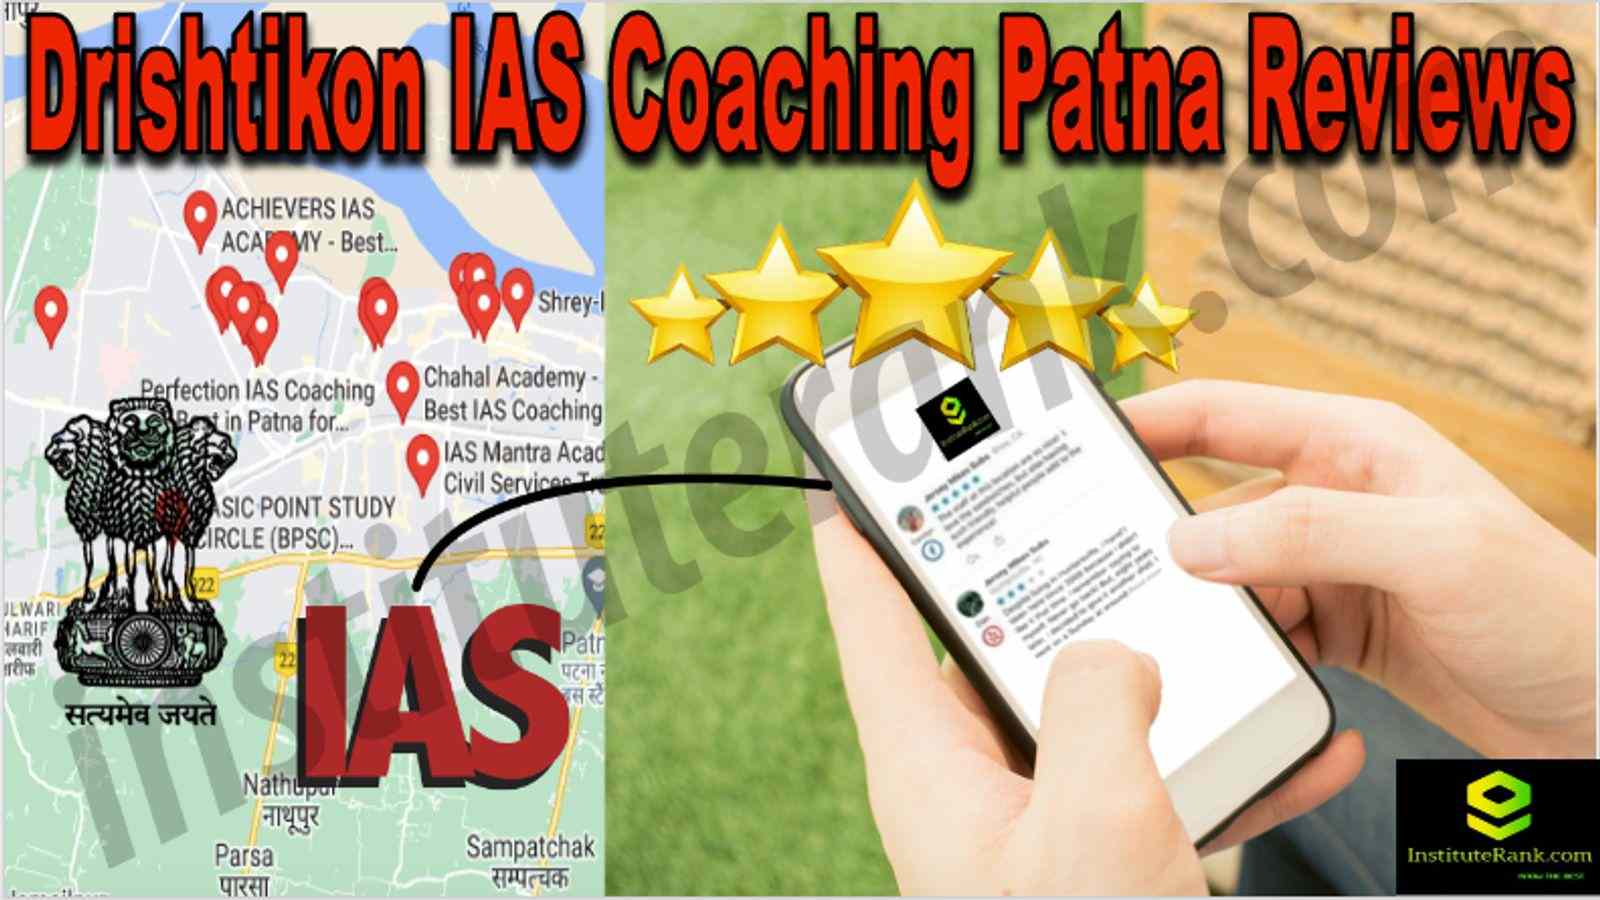 Drishtikon IAS Coaching Patna Reviews